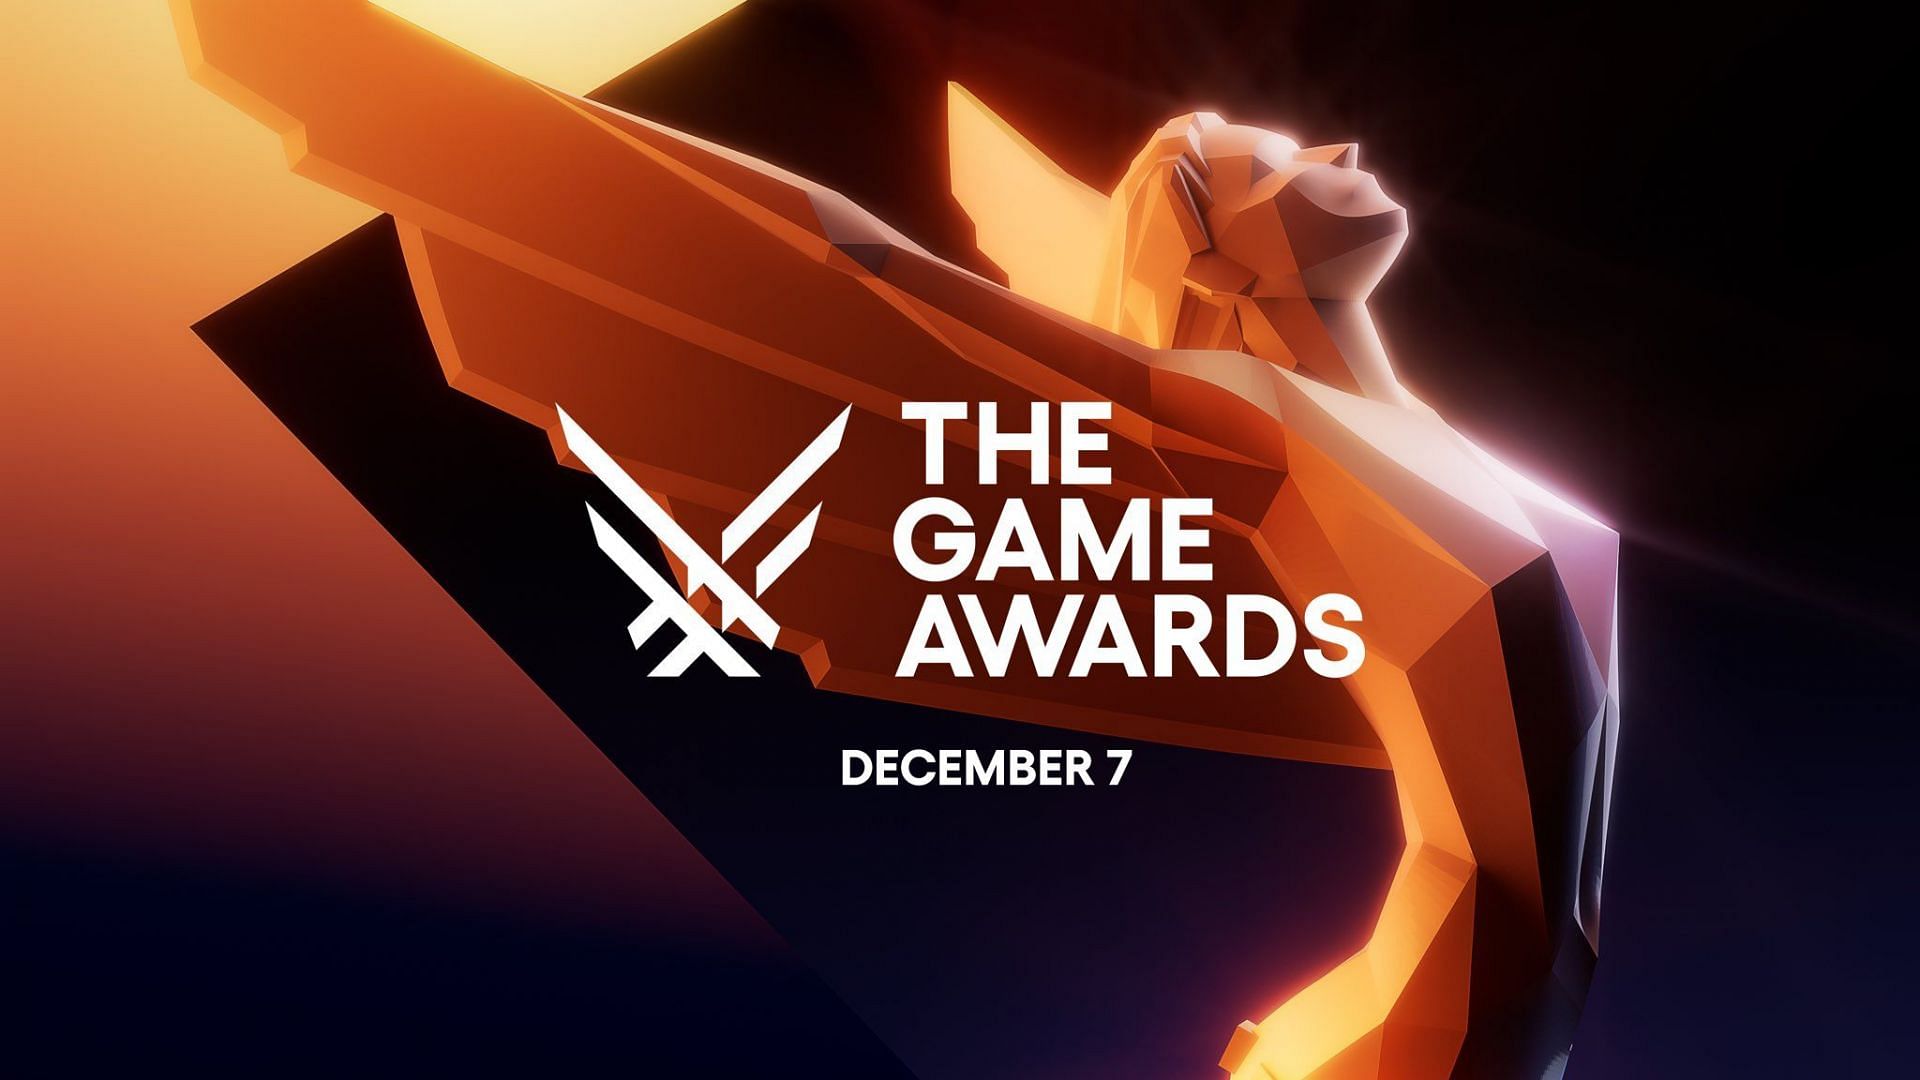 The Game Awards 2023: confirmada a data do evento deste ano